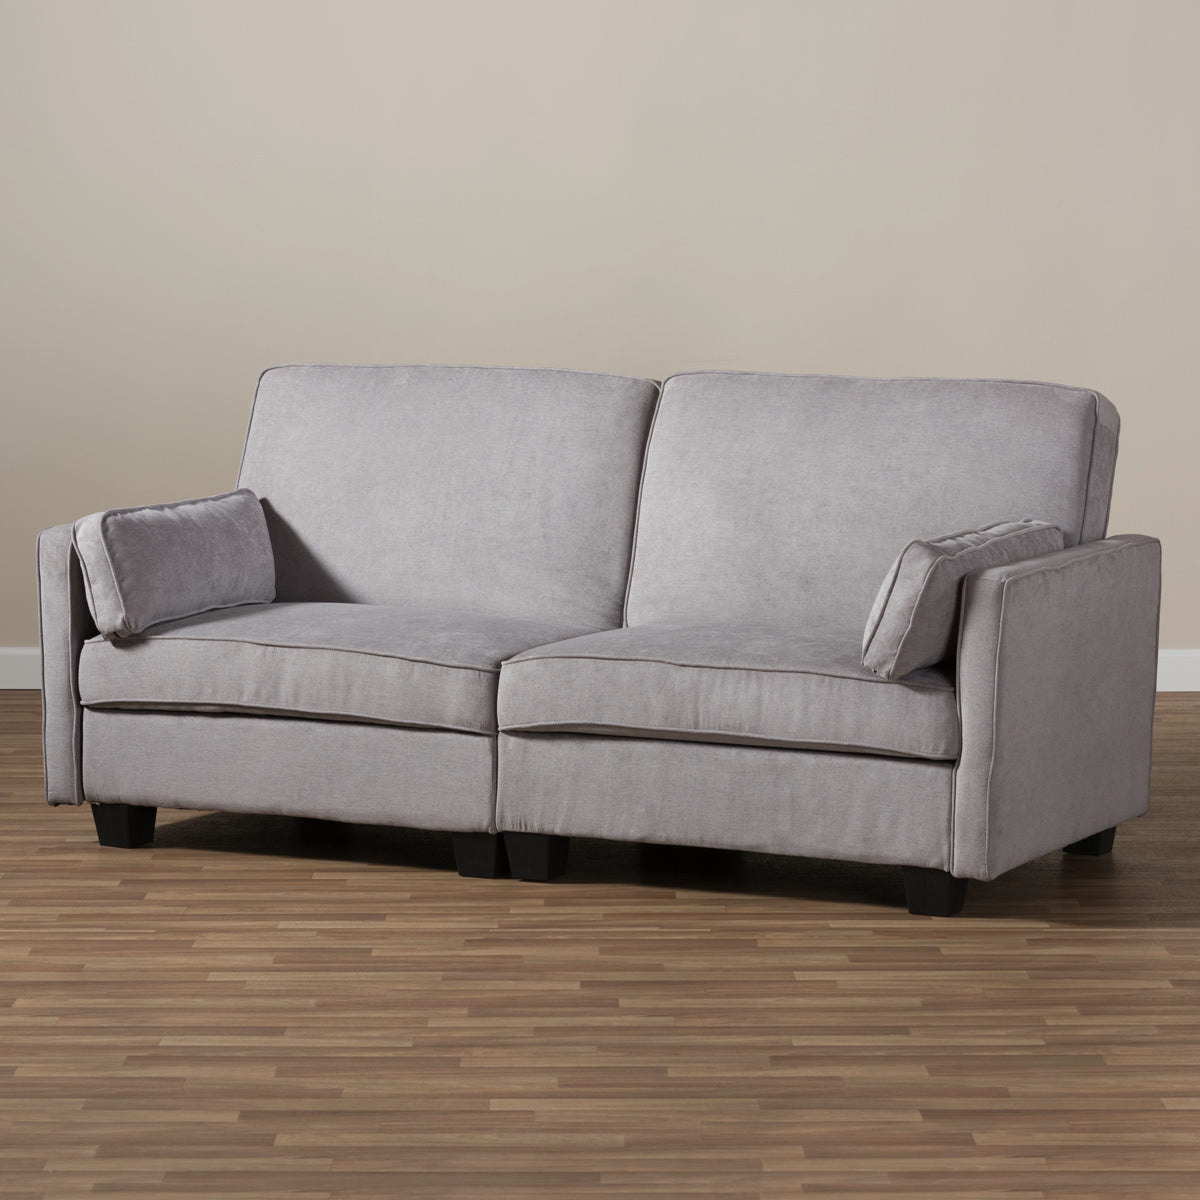 Baxton Studio Felicity Modern and Contemporary Light Gray Fabric Upholstered Sleeper Sofa Baxton Studio-sofas-Minimal And Modern - 5